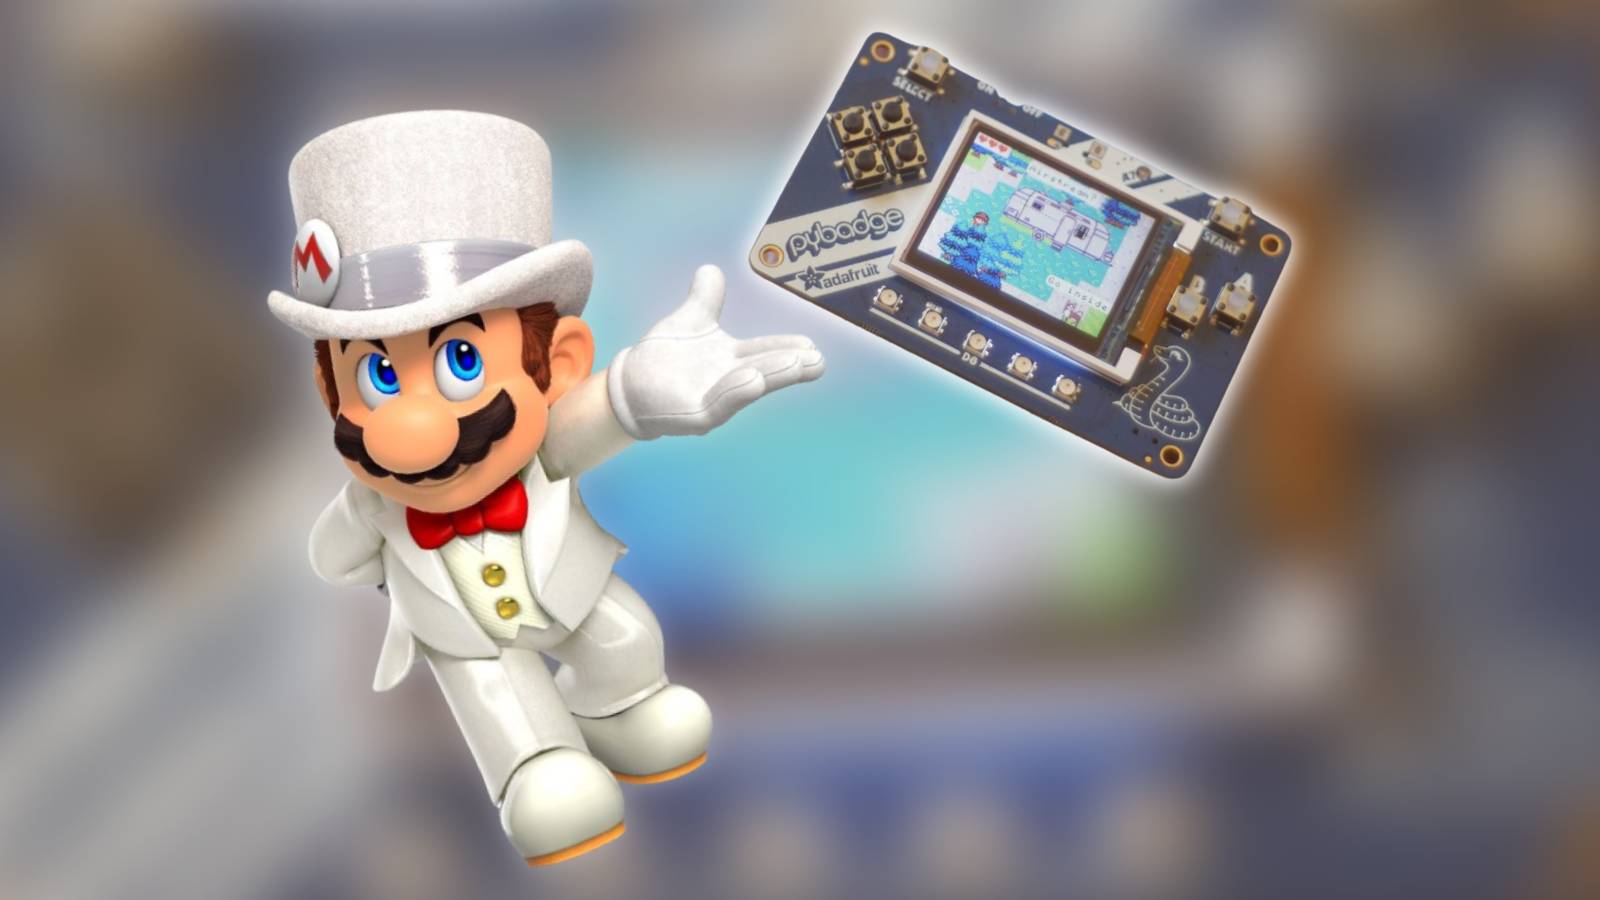 Mario next to a gaming handheld.